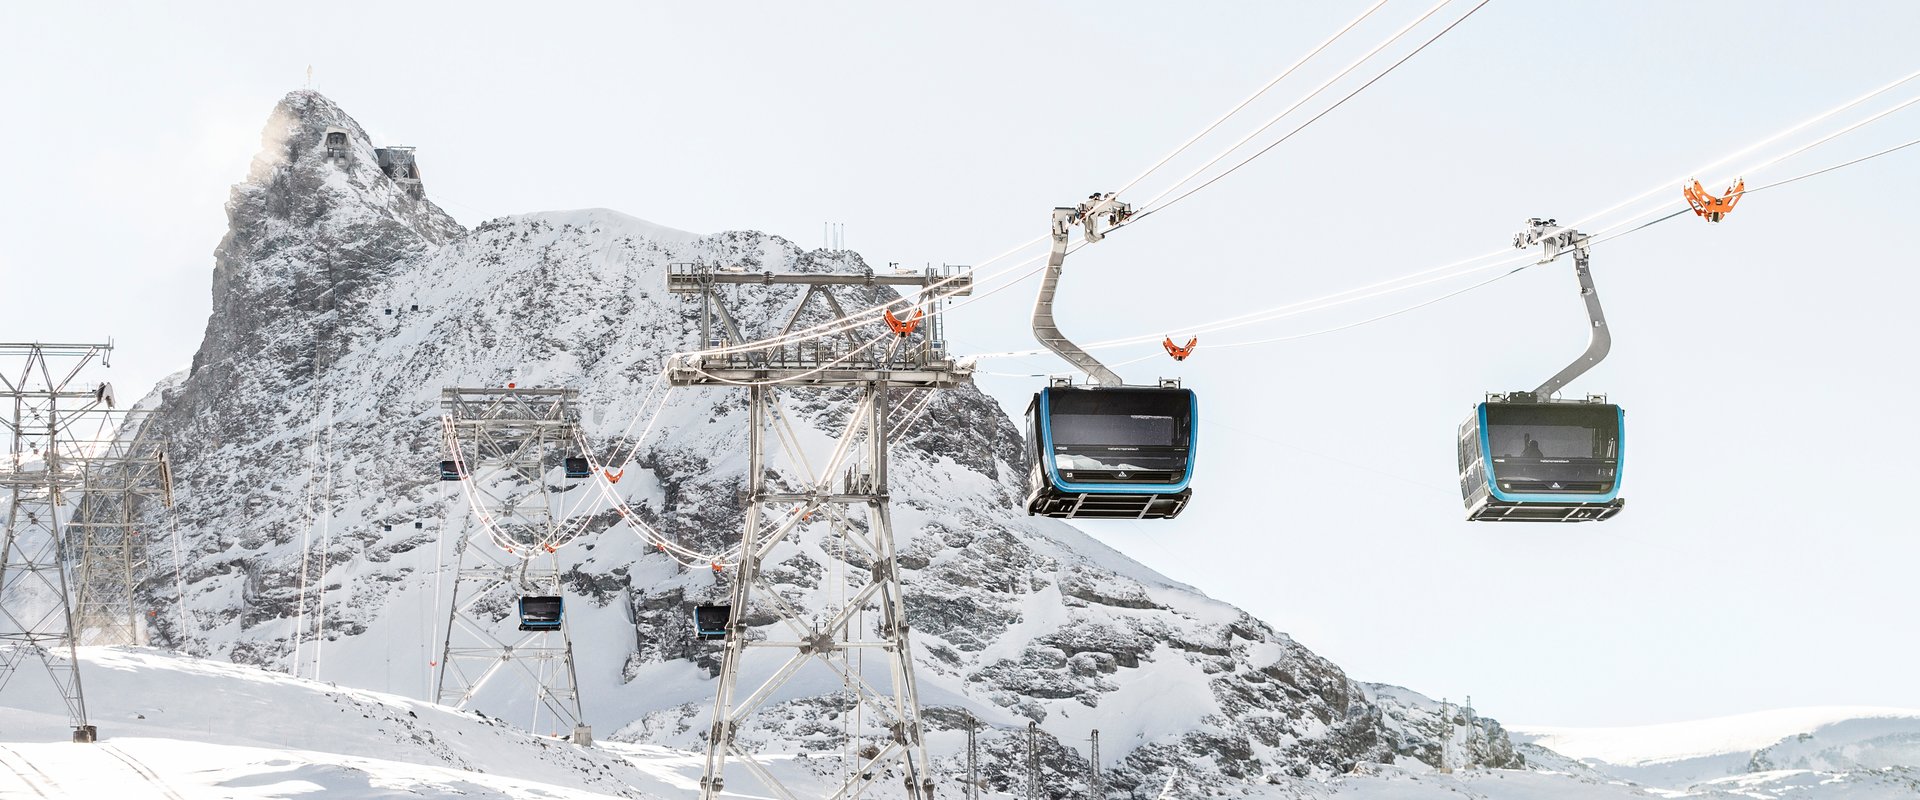 Gondolas in the mountains of Zermatt